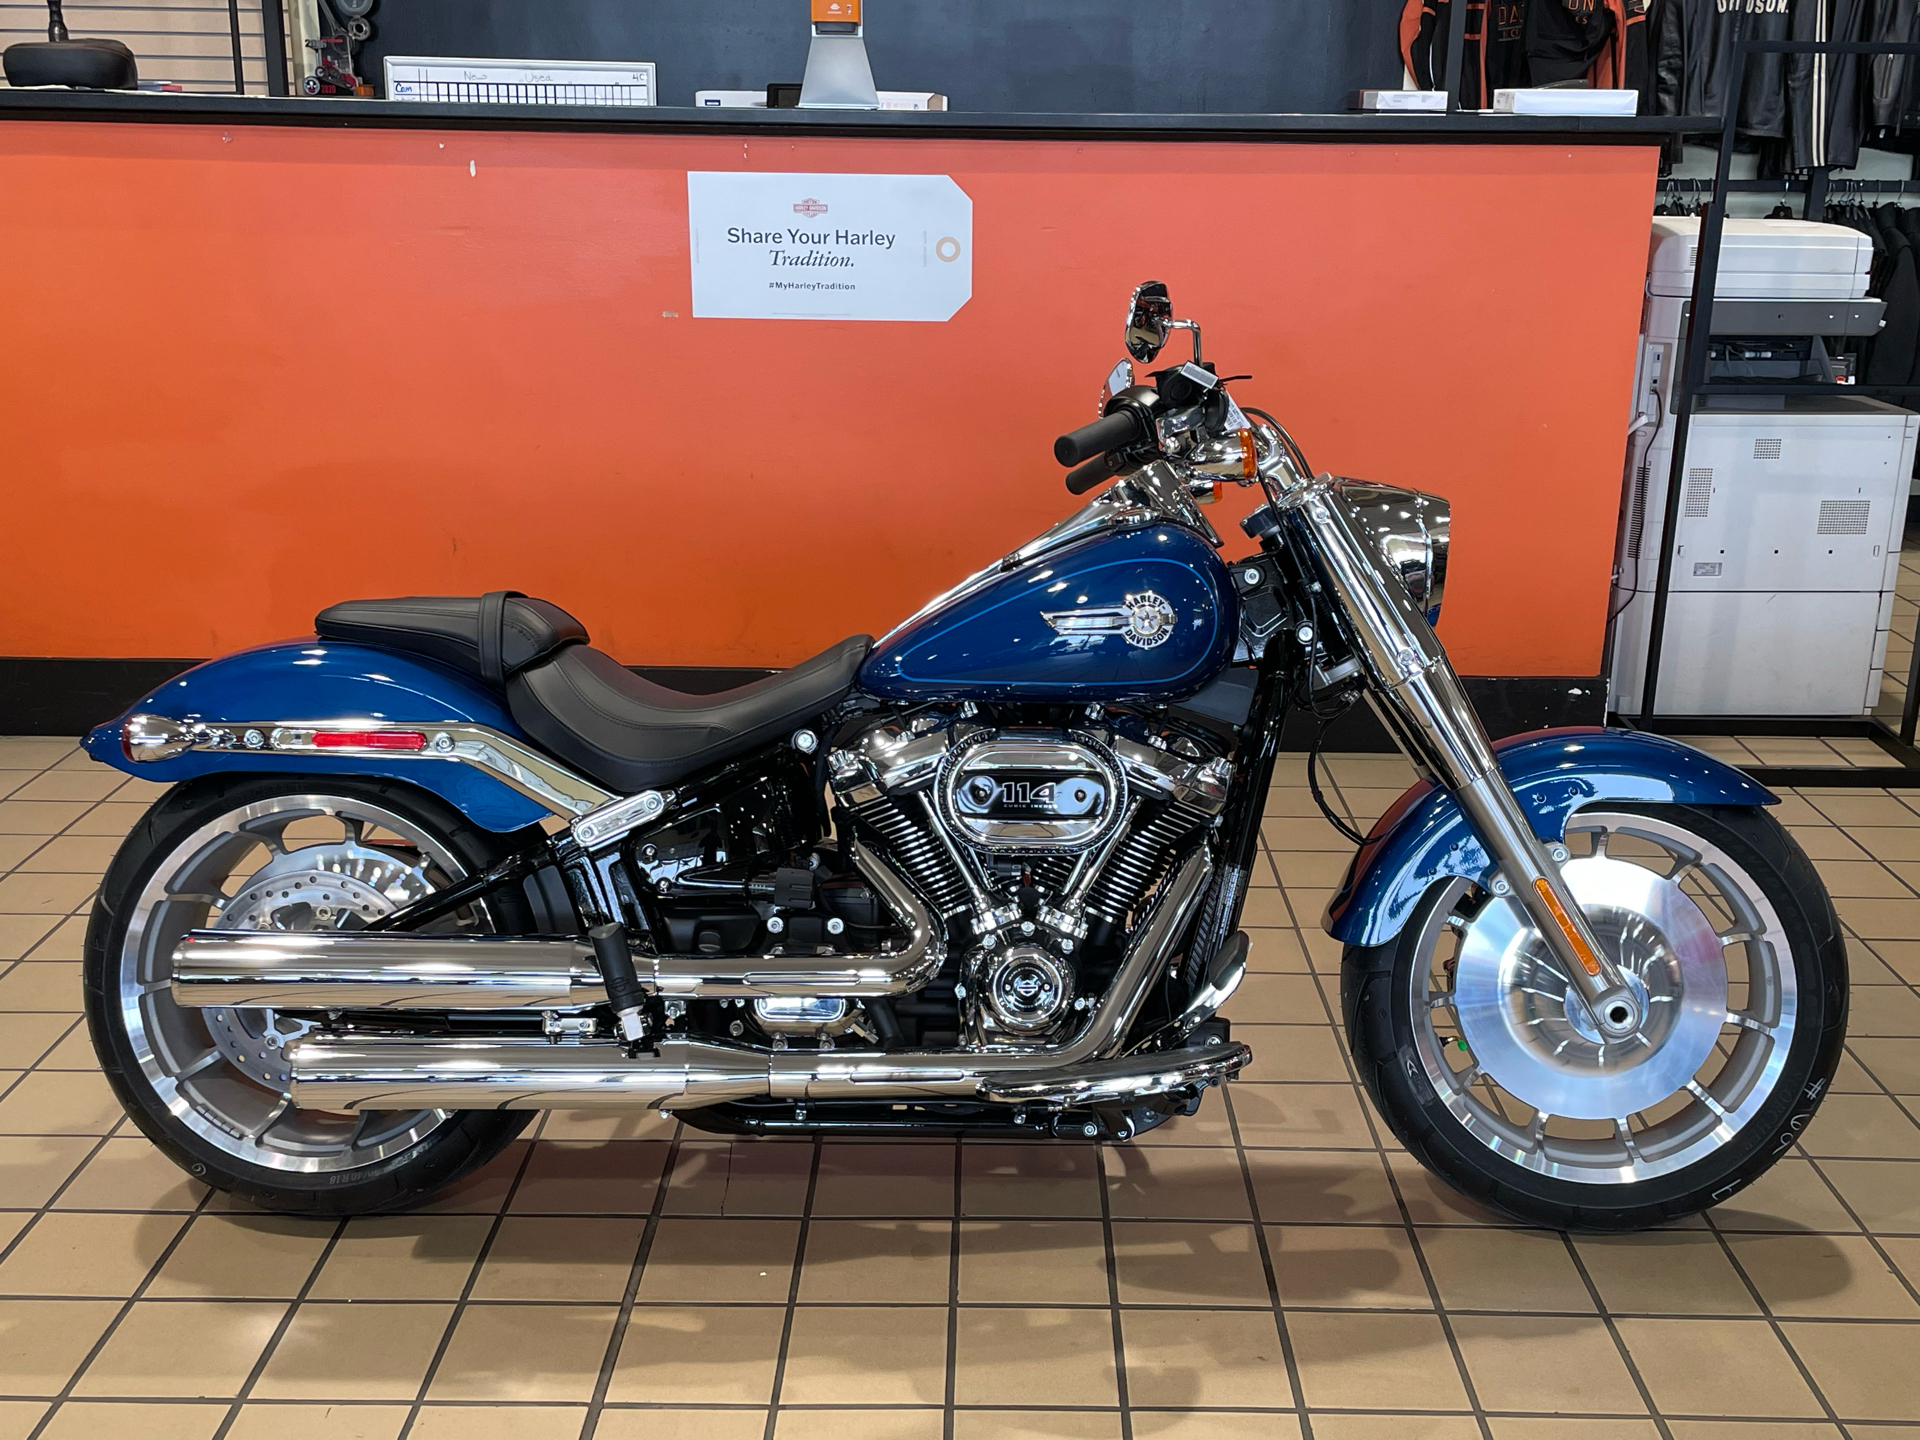 2022 Harley-Davidson Fat Boy® 114 in Dumfries, Virginia - Photo 2